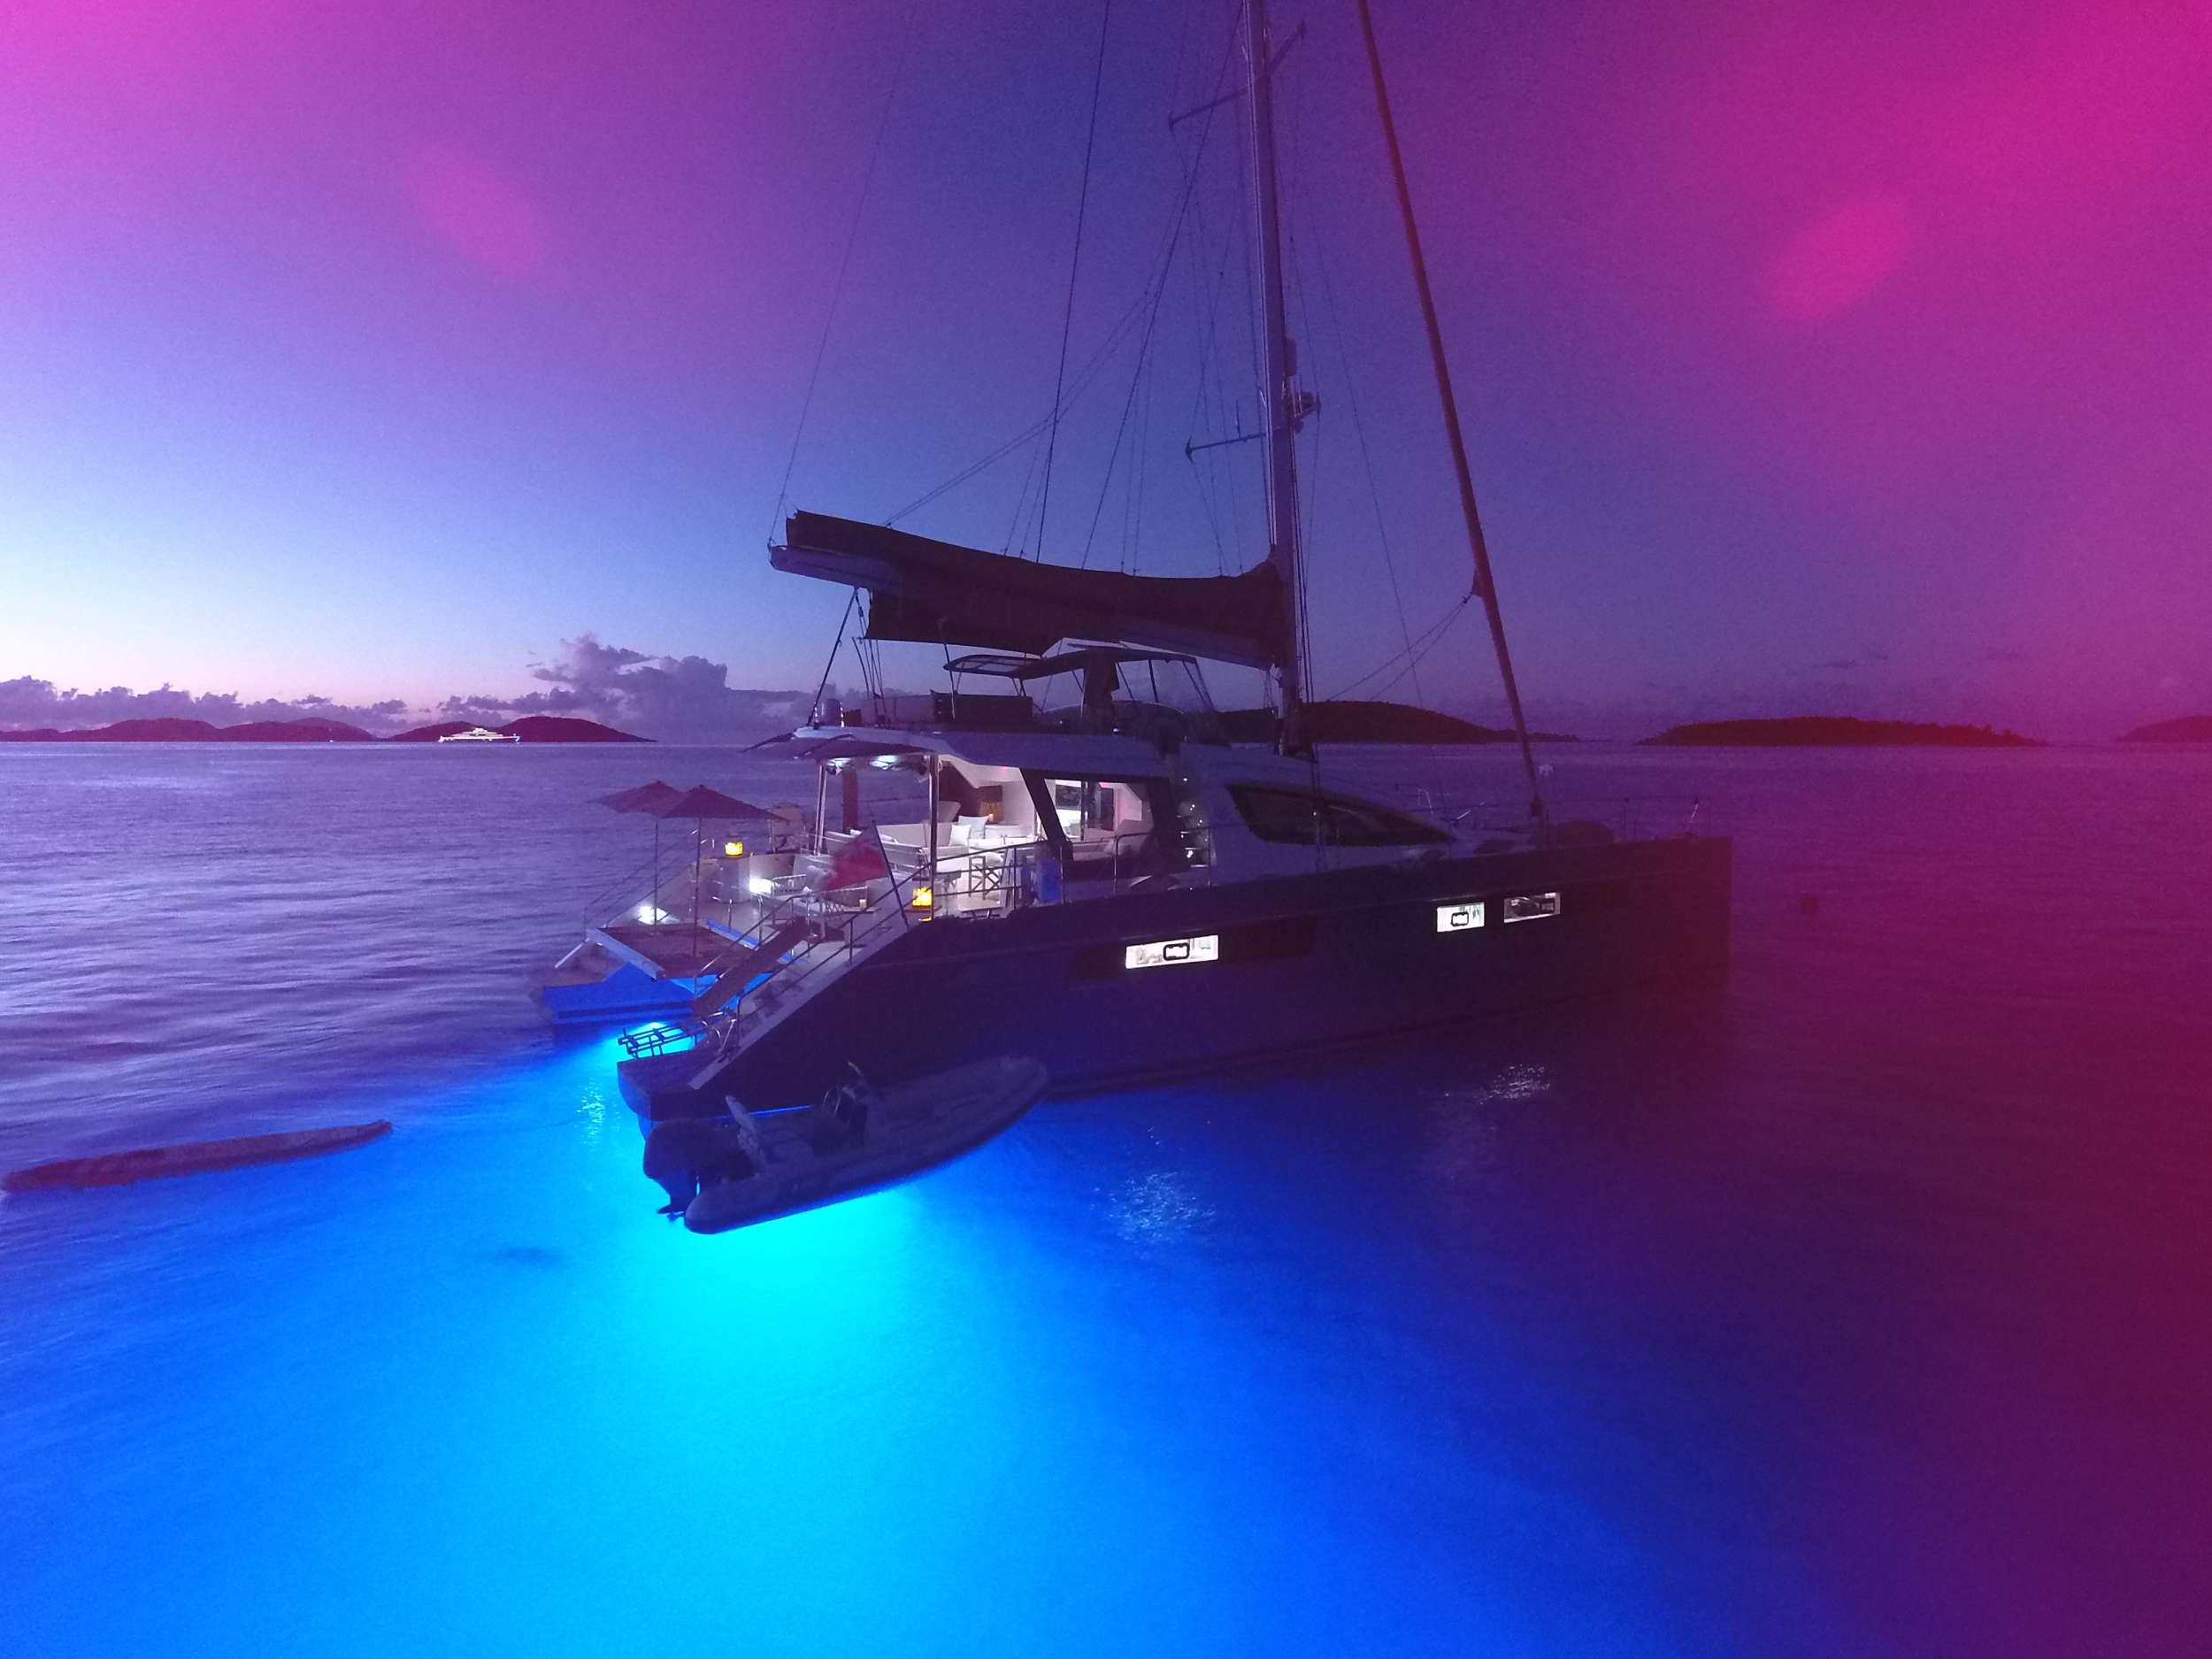 Catamaran Yacht 'ALLURE 64' Allure at Night, 6 PAX, 3 Crew, 64.00 Ft, 19.00 Meters, Built 2020, Privilege